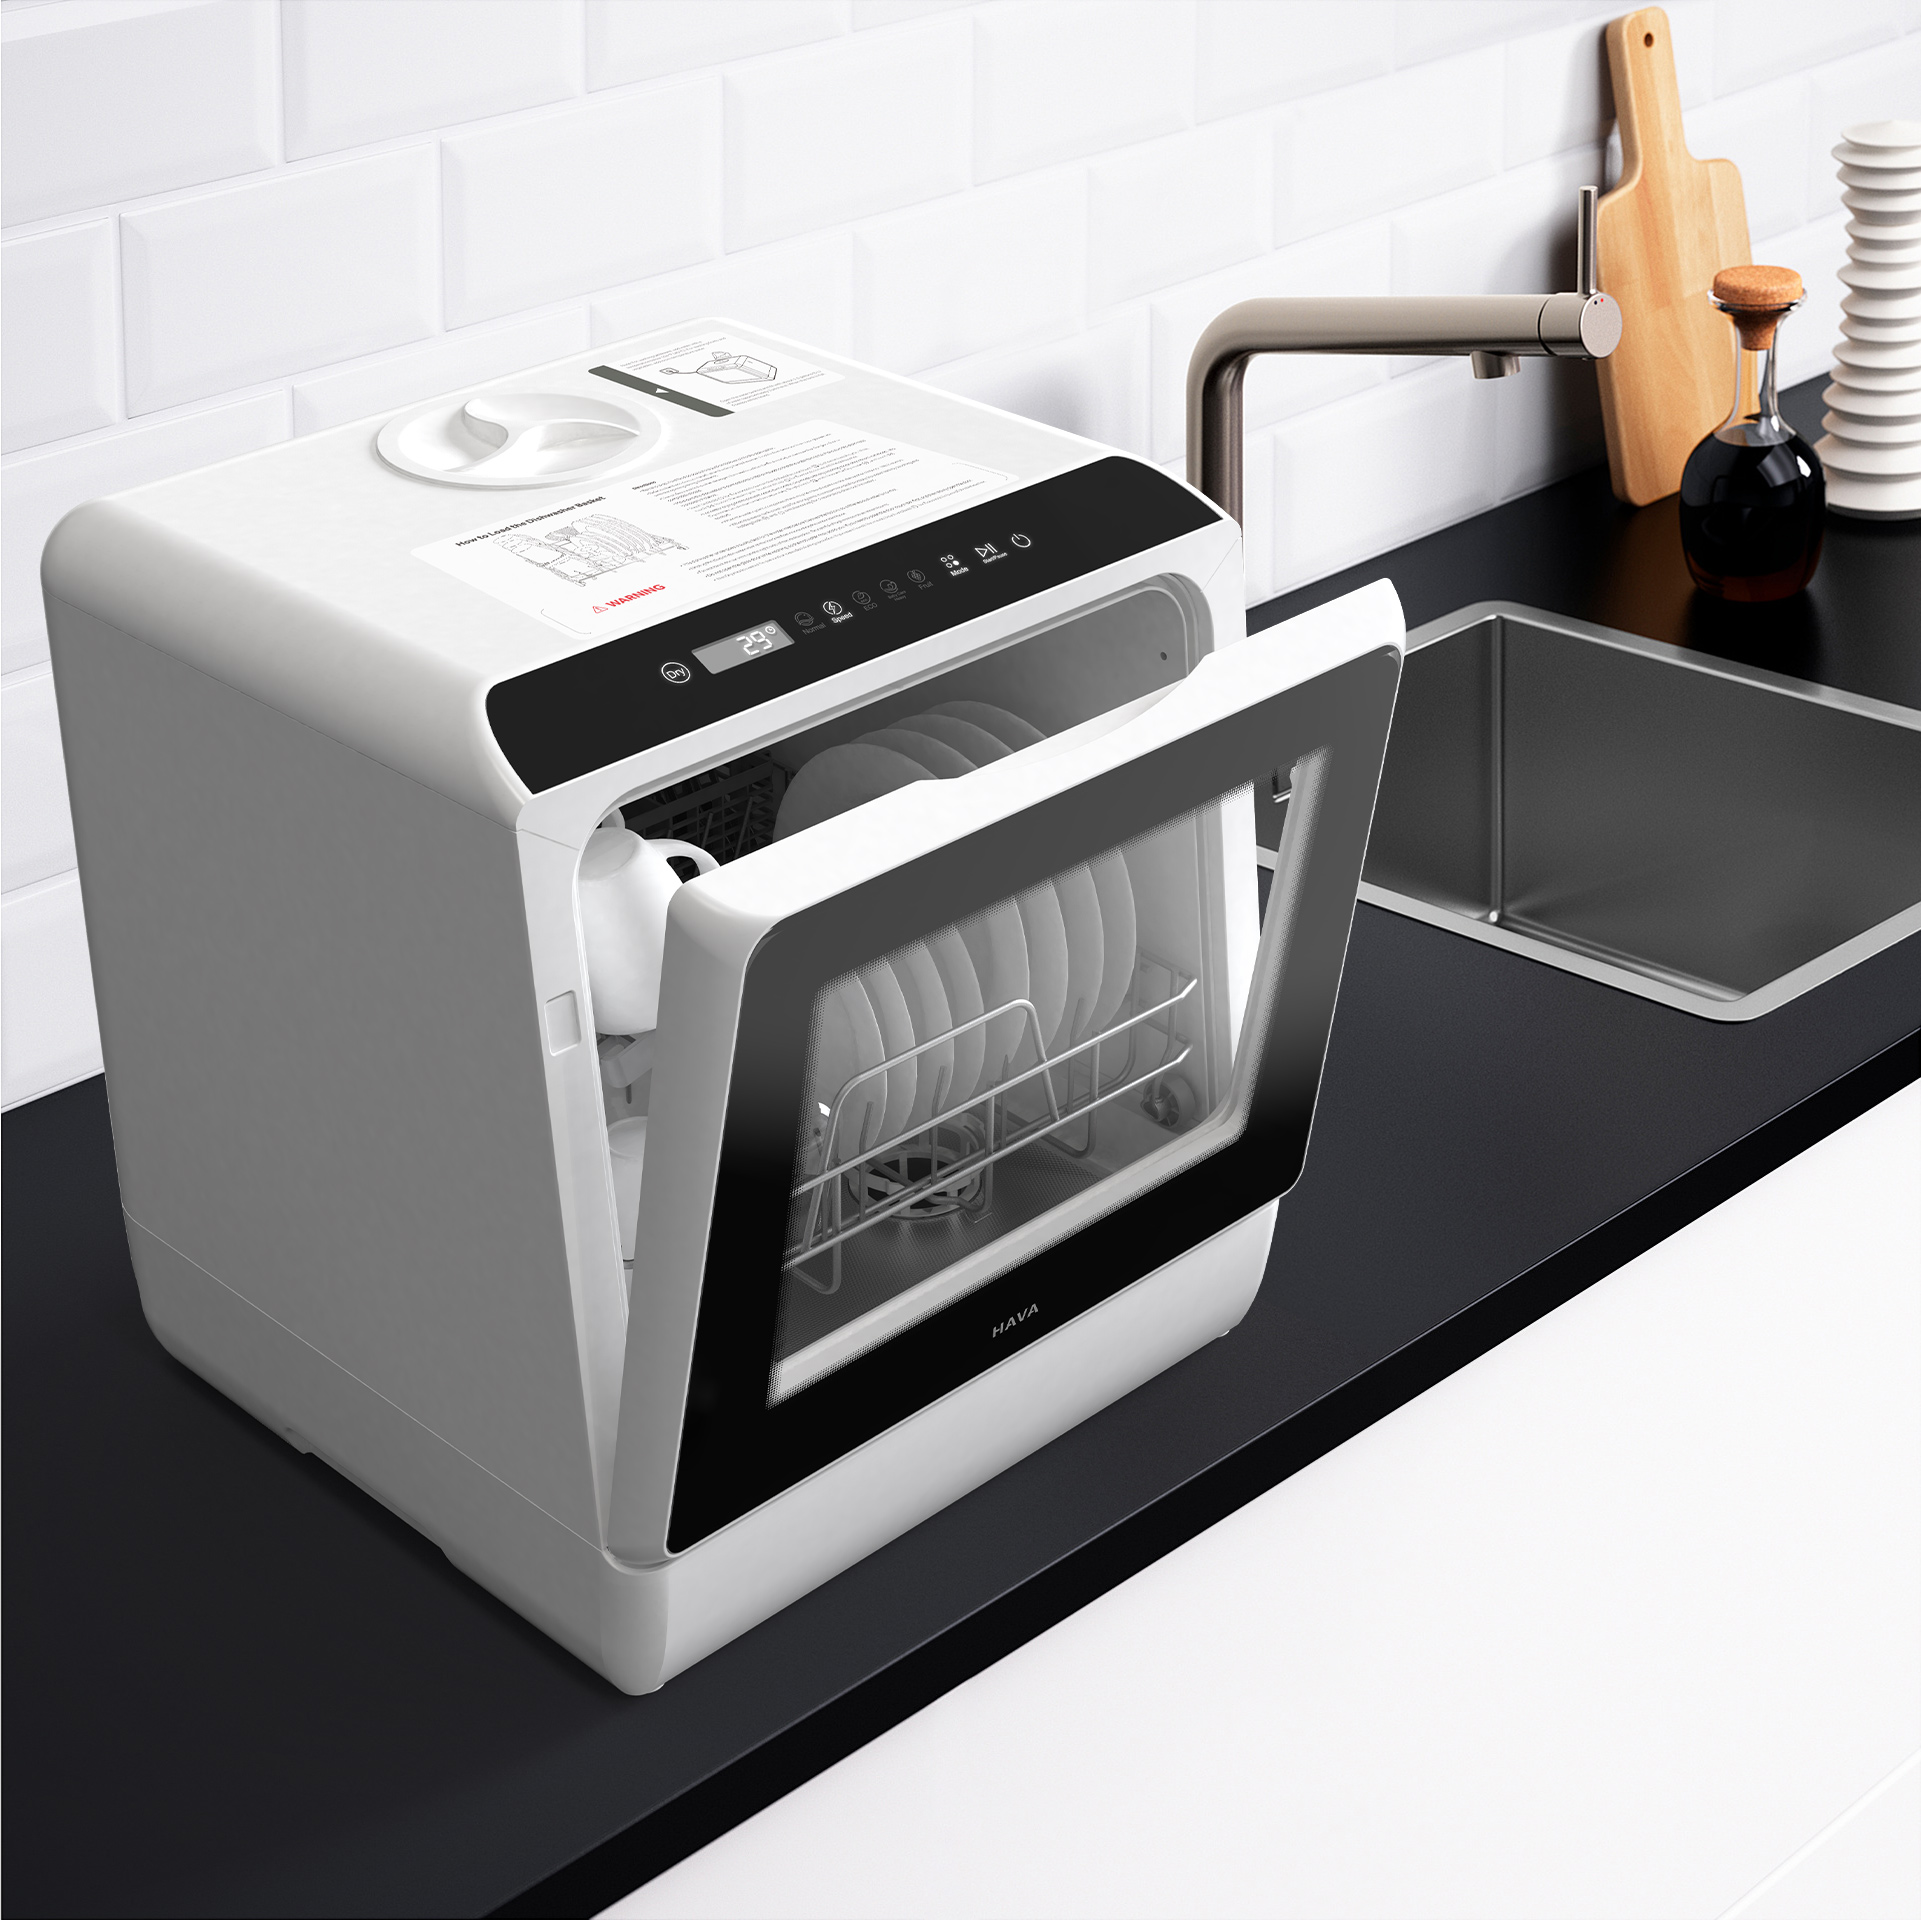 NOVETE ‎TDQR01 countertop dishwasher review